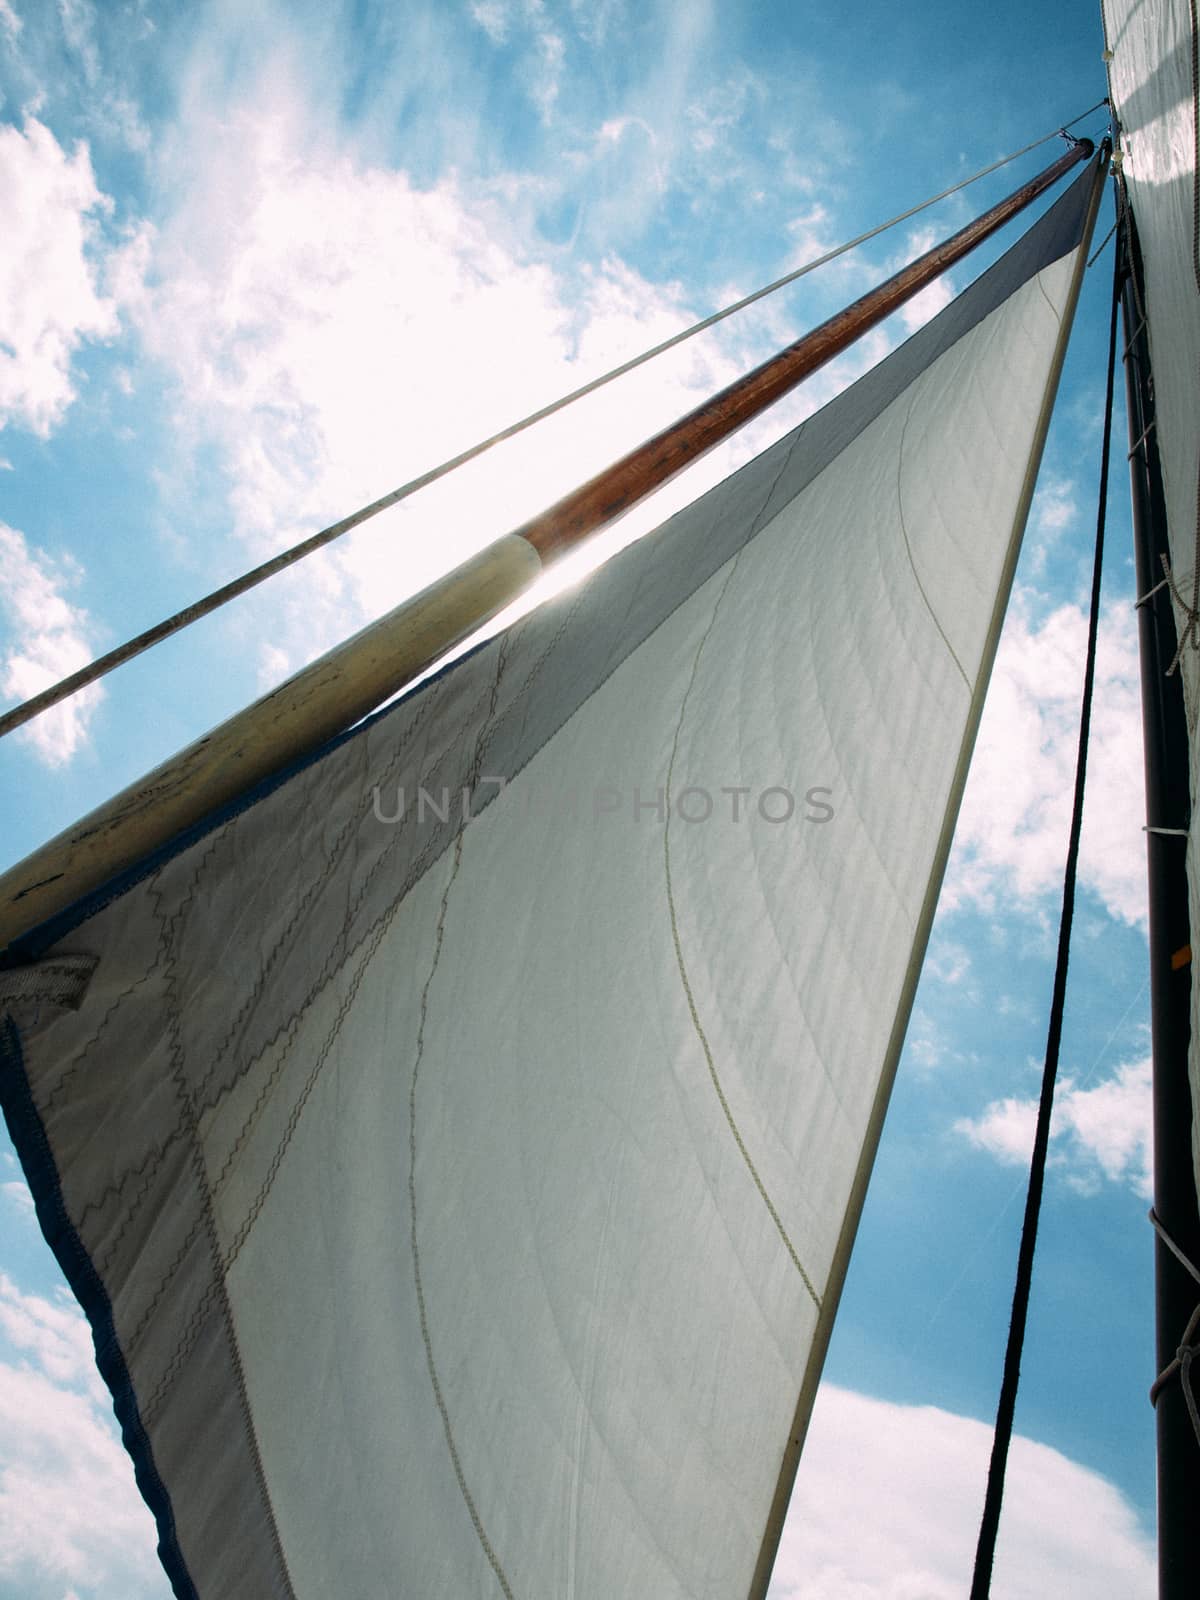 White sail against blue sky by kimbo-bo